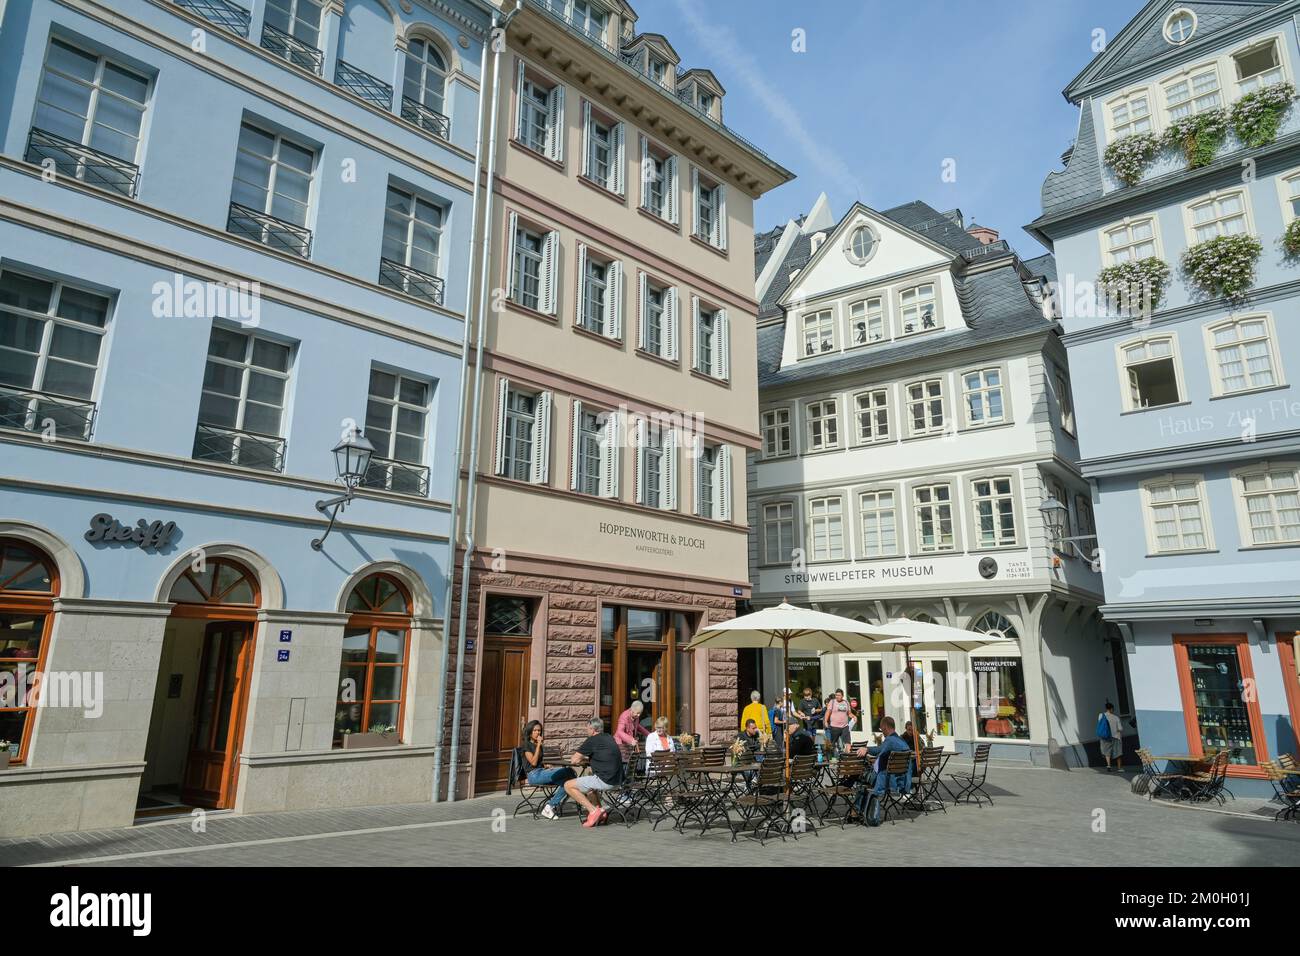 Cafe Hoppenworth & Ploch, Hühnermarkt, Old Town, Frankfurt am Main, Hesse, Germany, Europe Stock Photo